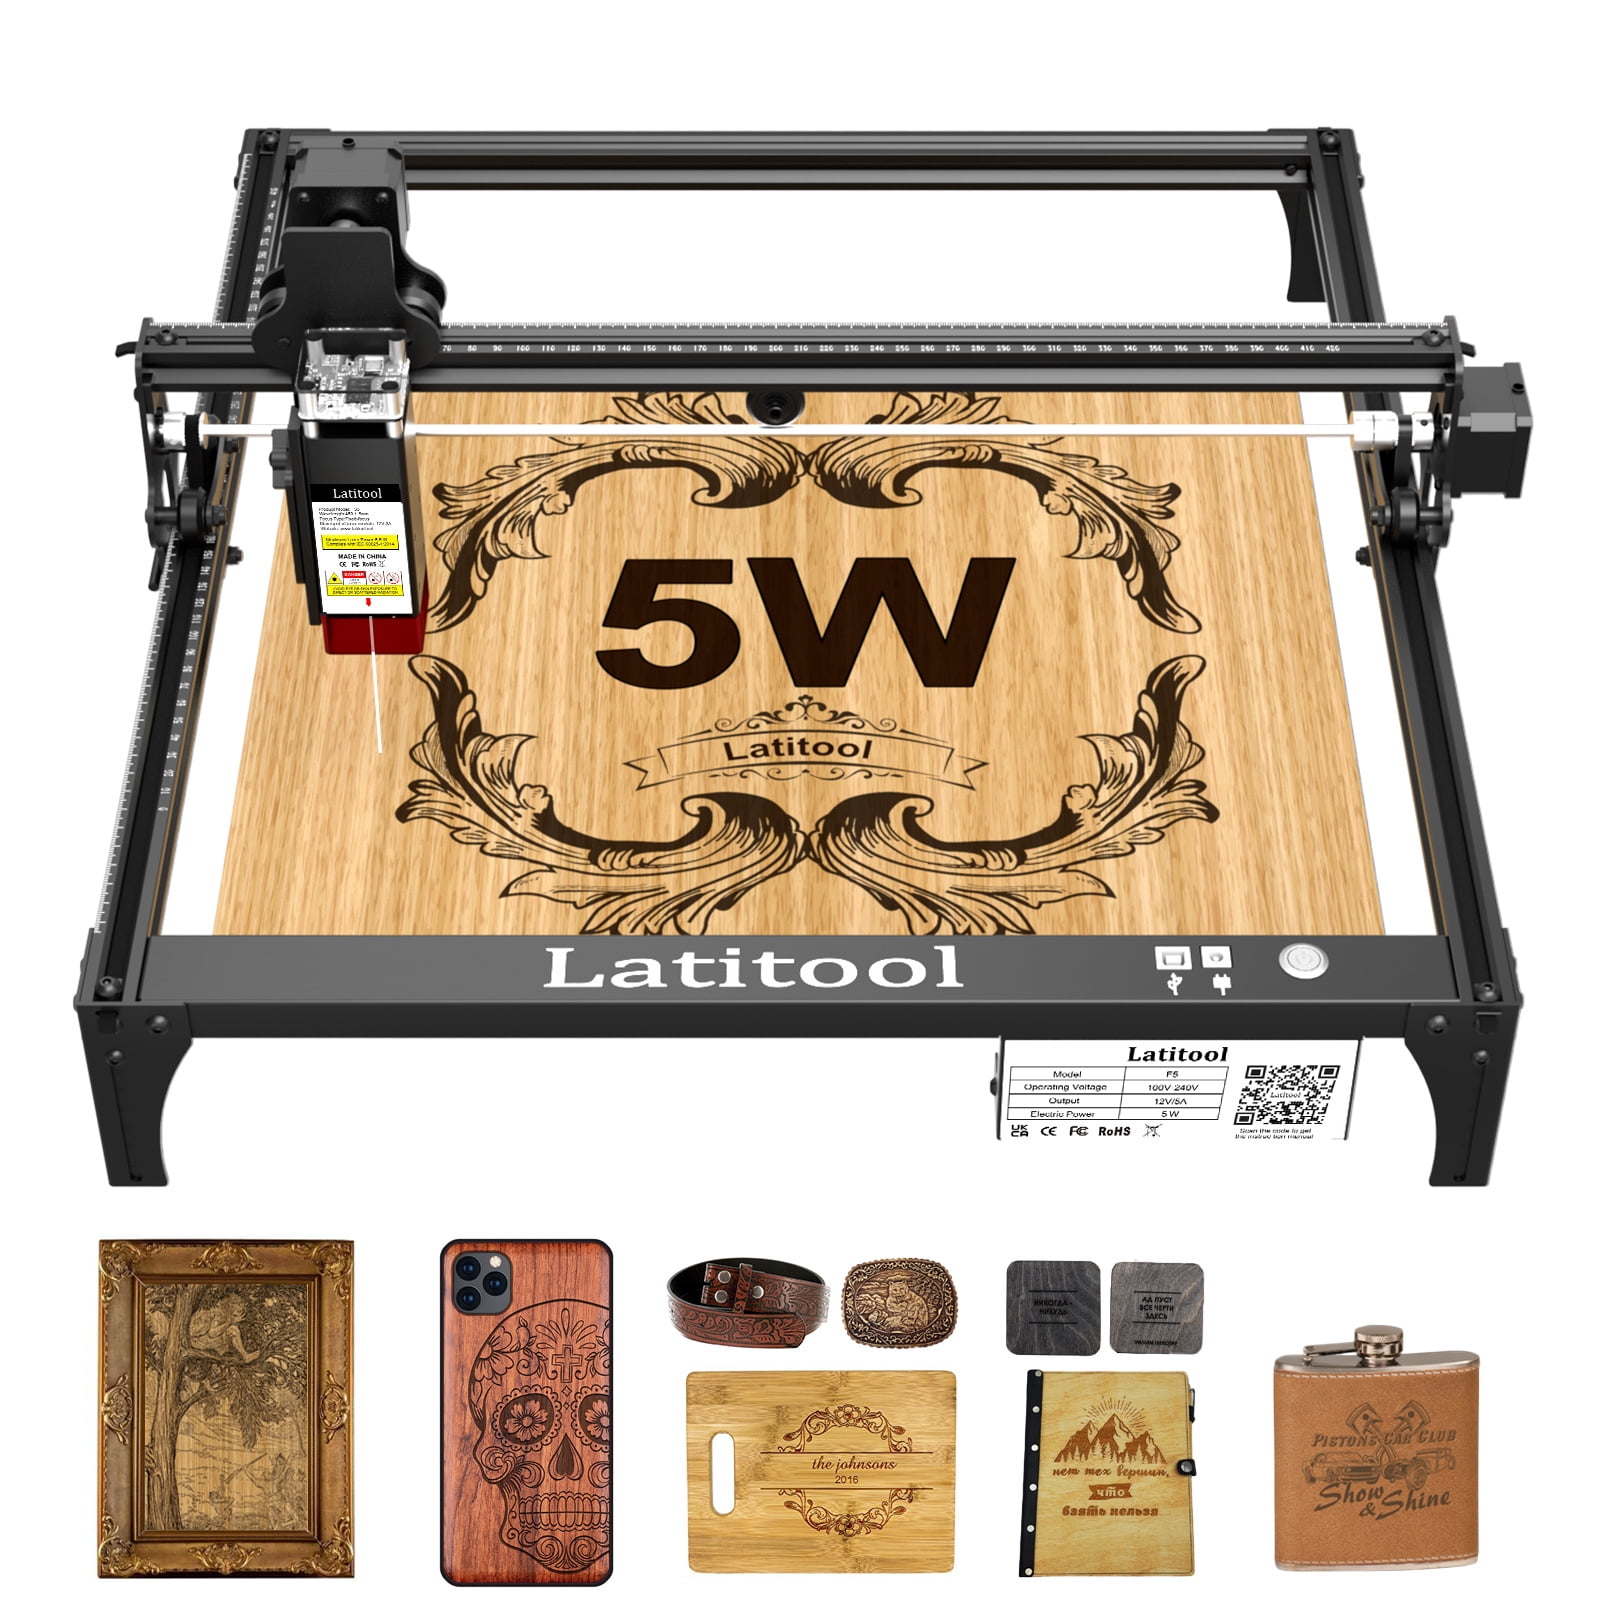 Wholesale 50w Popular Model Engraving machine Maquina de grabado